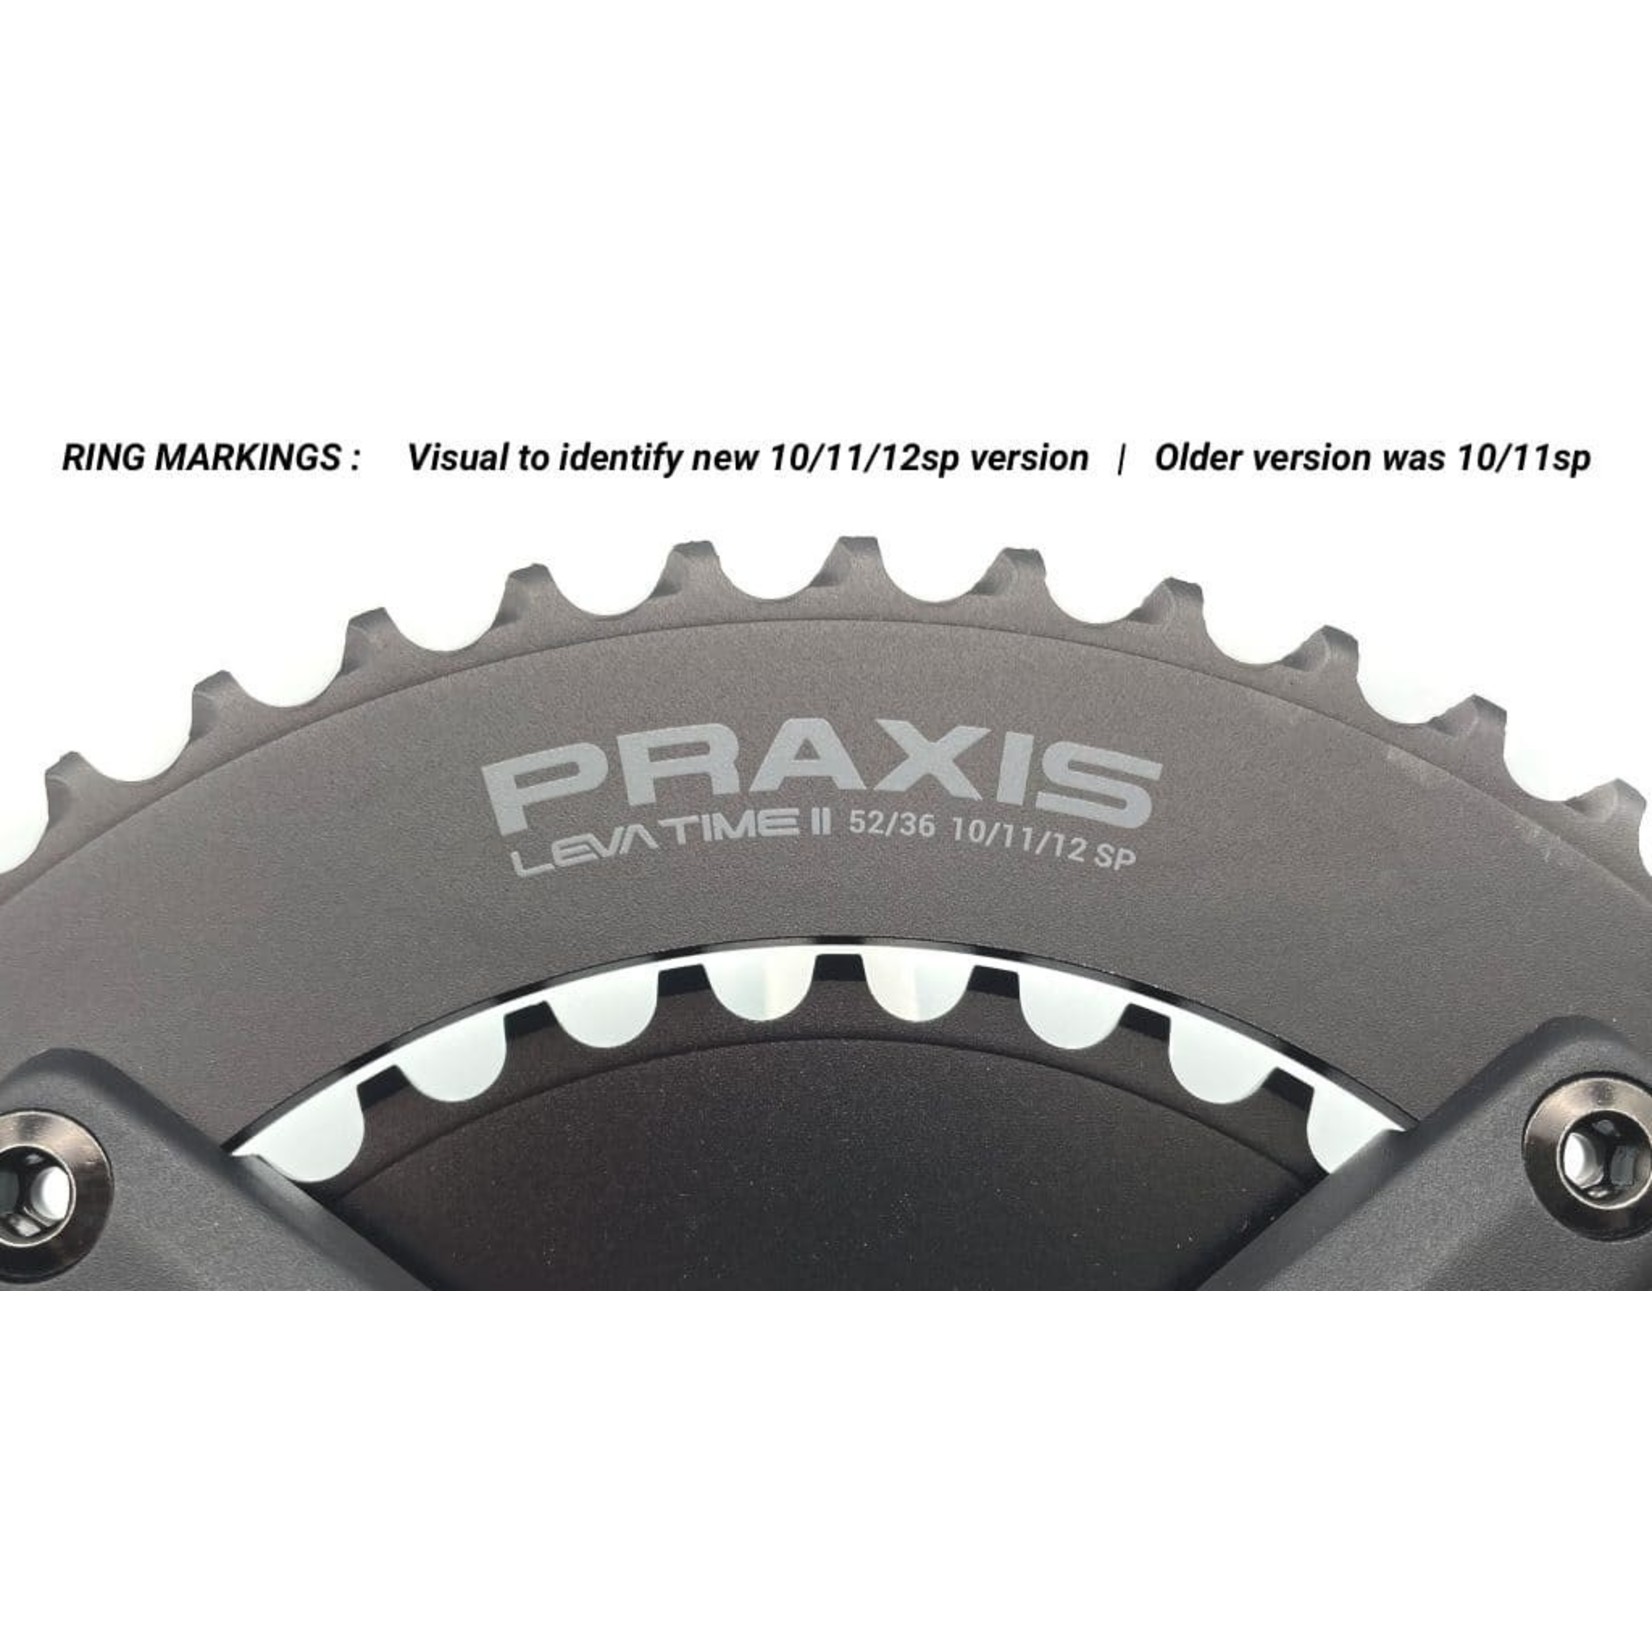 Praxis Praxis Road cranks - Alba - Alloy,175mm 50/34